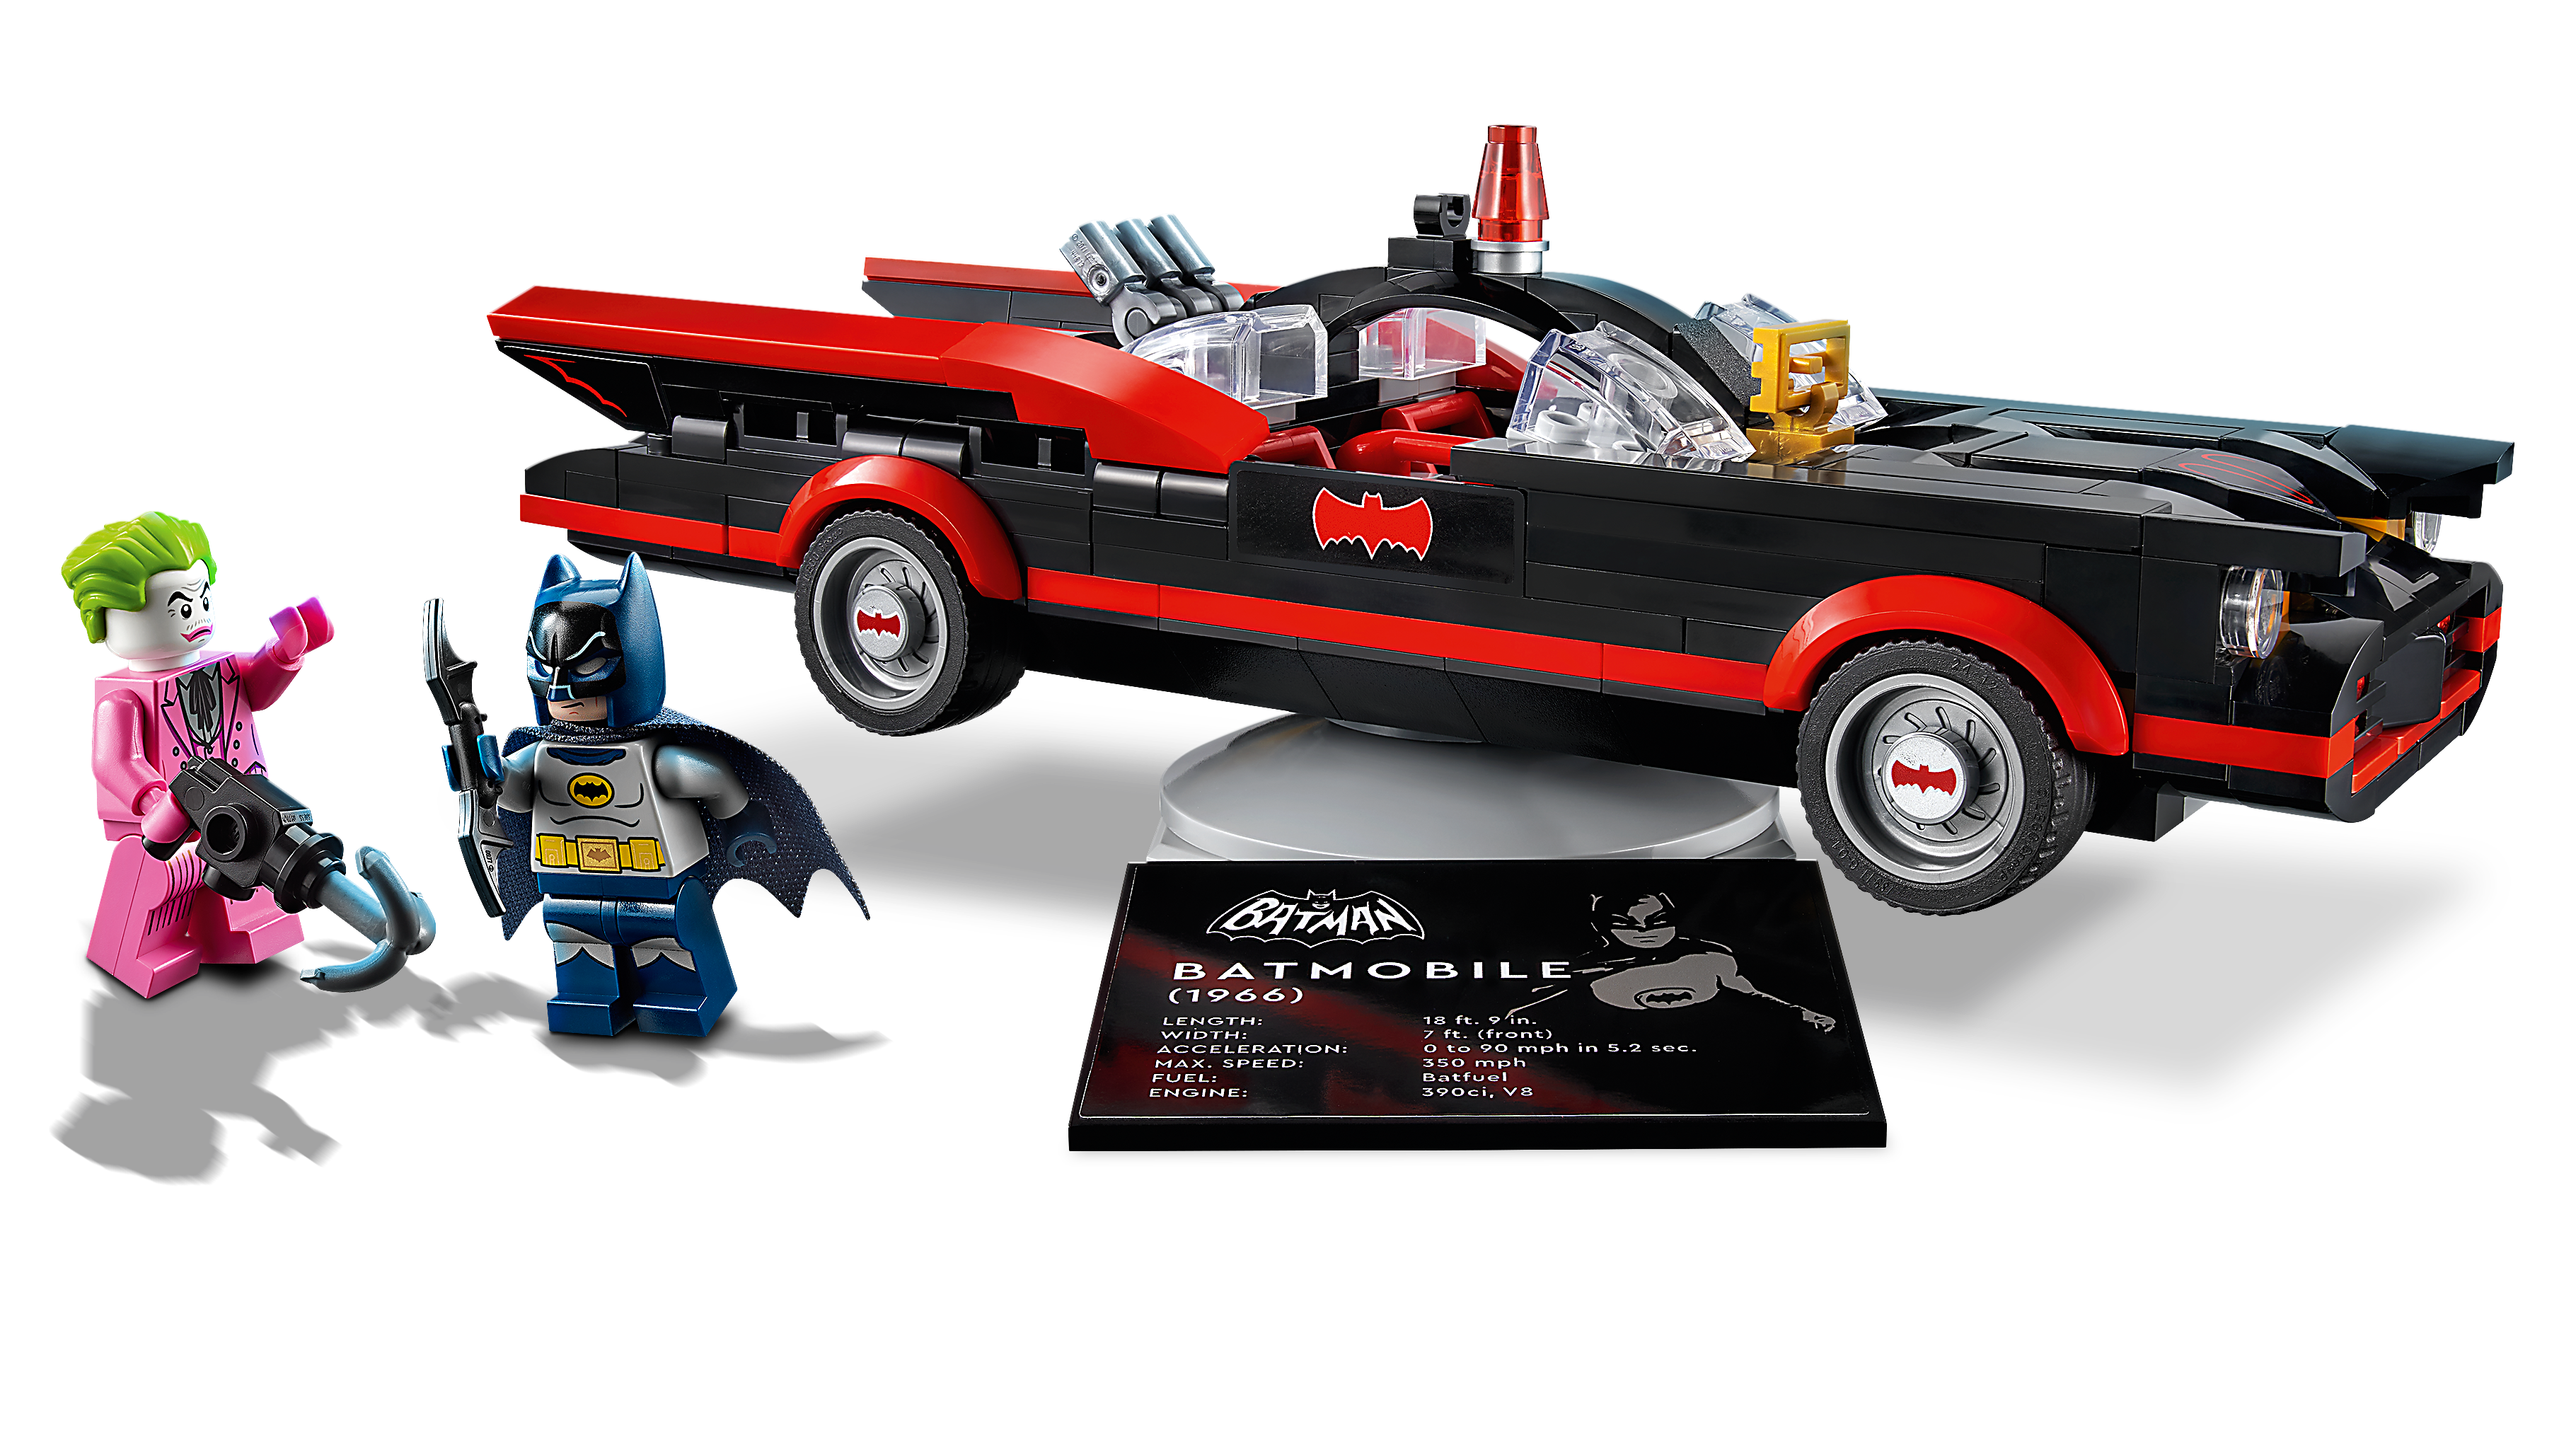 Lego Keaton Batmobile Kit Debuts At Nearly 2 Feet Long